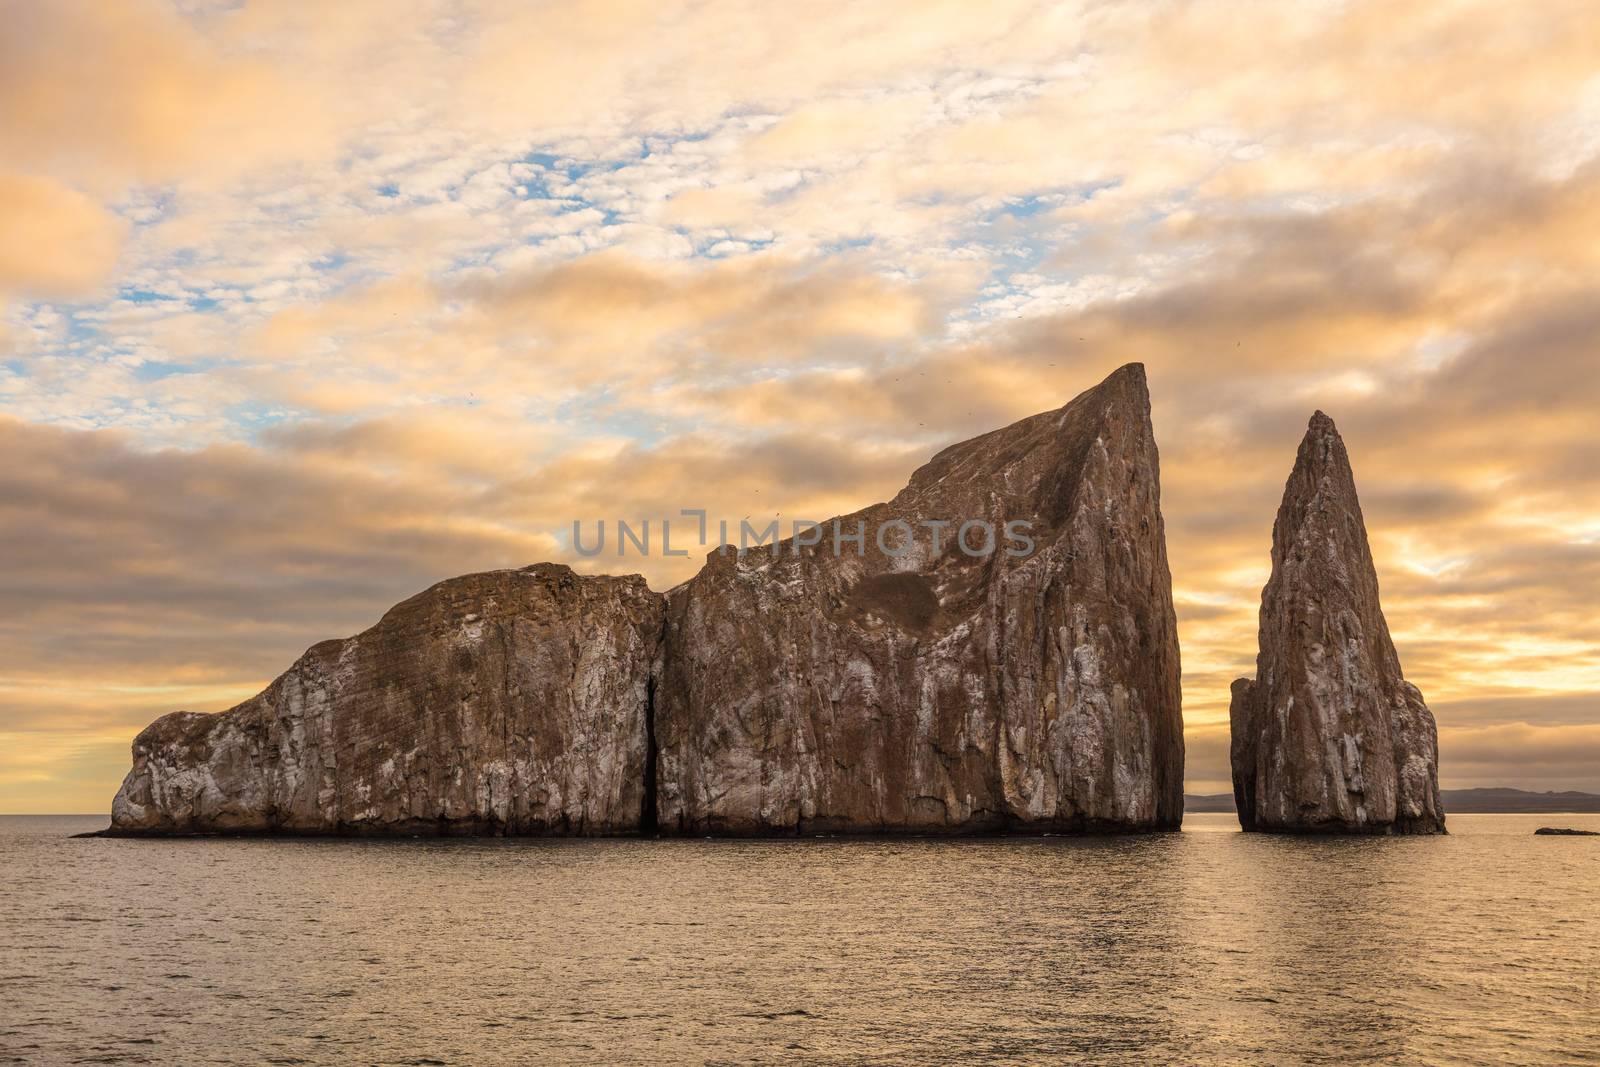 Galapagos Kicker Rock nature landscape - iconic landmark and tourist destination by Maridav